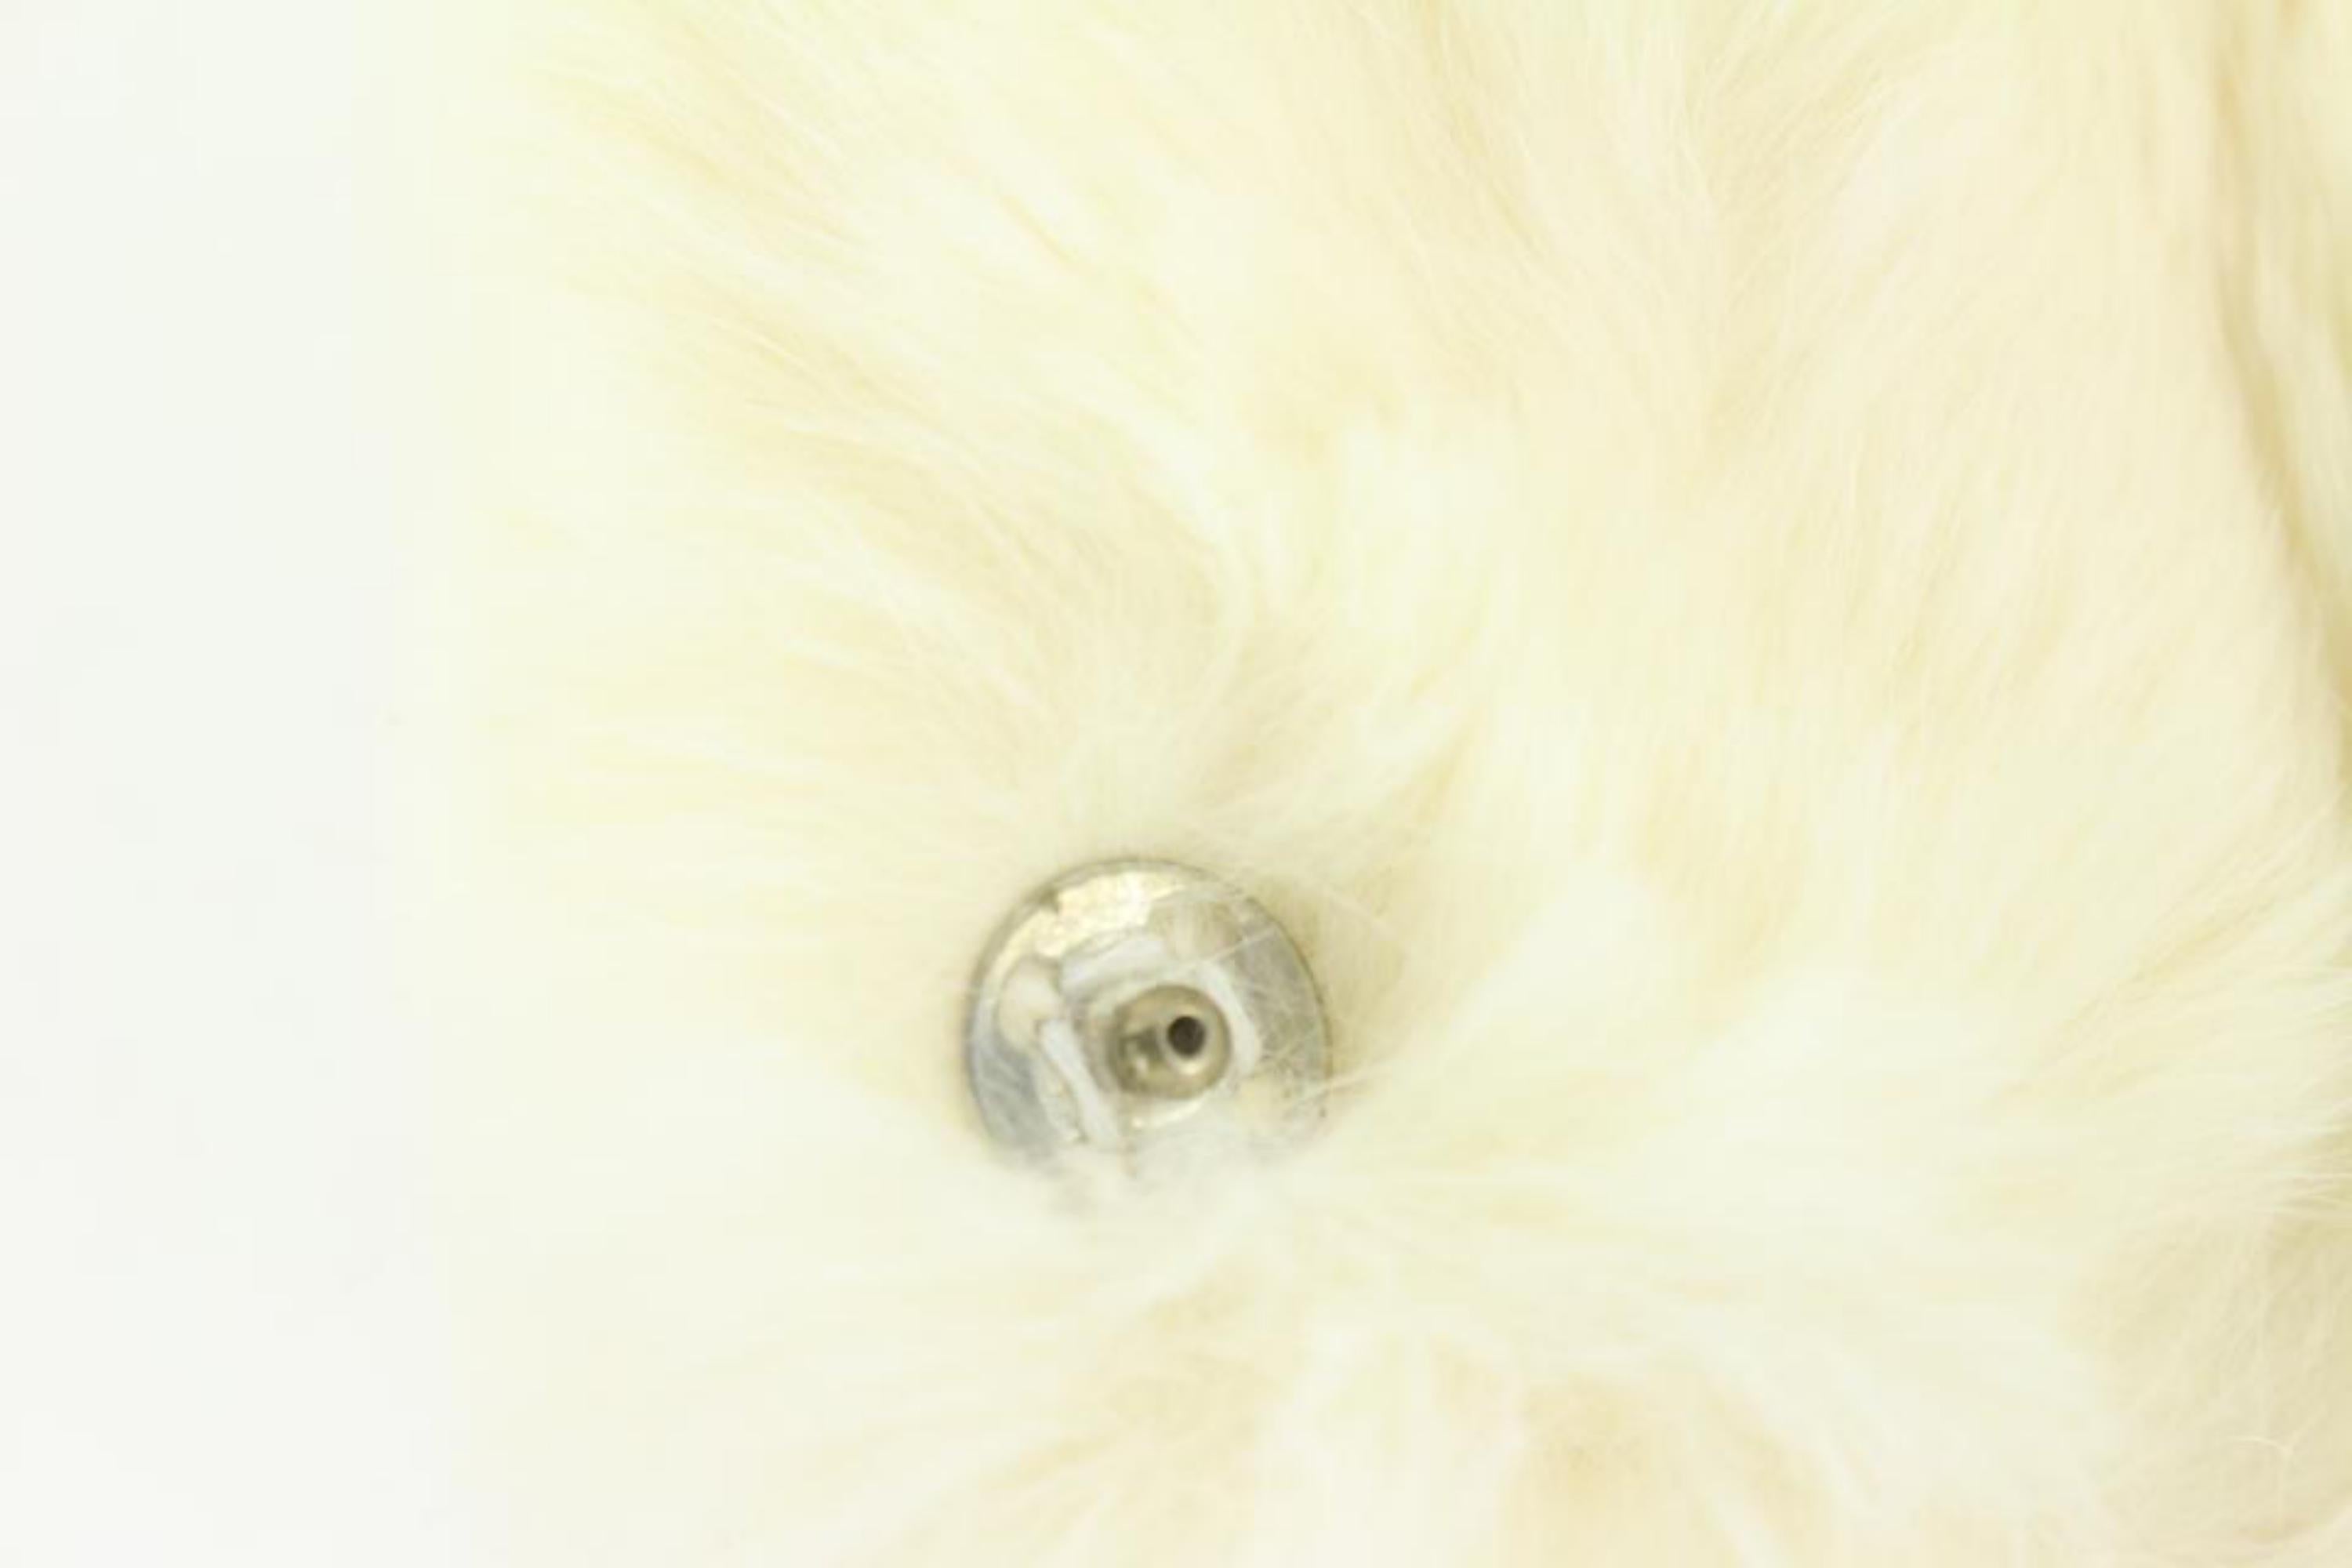 Chanel White x Black CC Rabbit Fur Wrist Band Bracelet s331ck41 For Sale 6